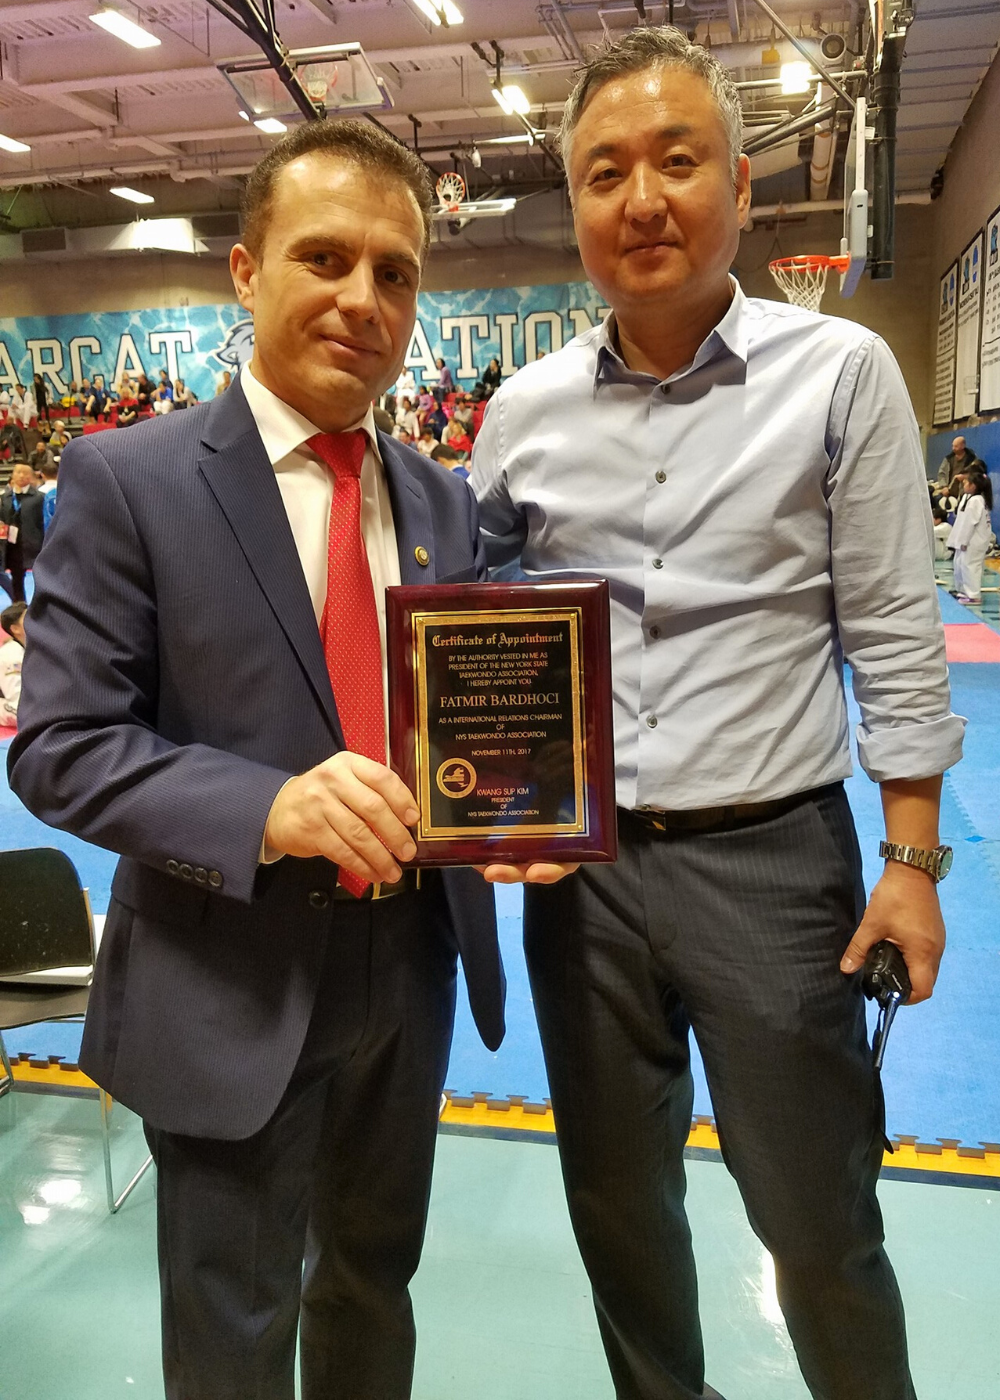 Fatmir Bardhoci with the former world champion in Olympic Taekwondo, president of the Taekwondo Association of New York, Kwang Kim